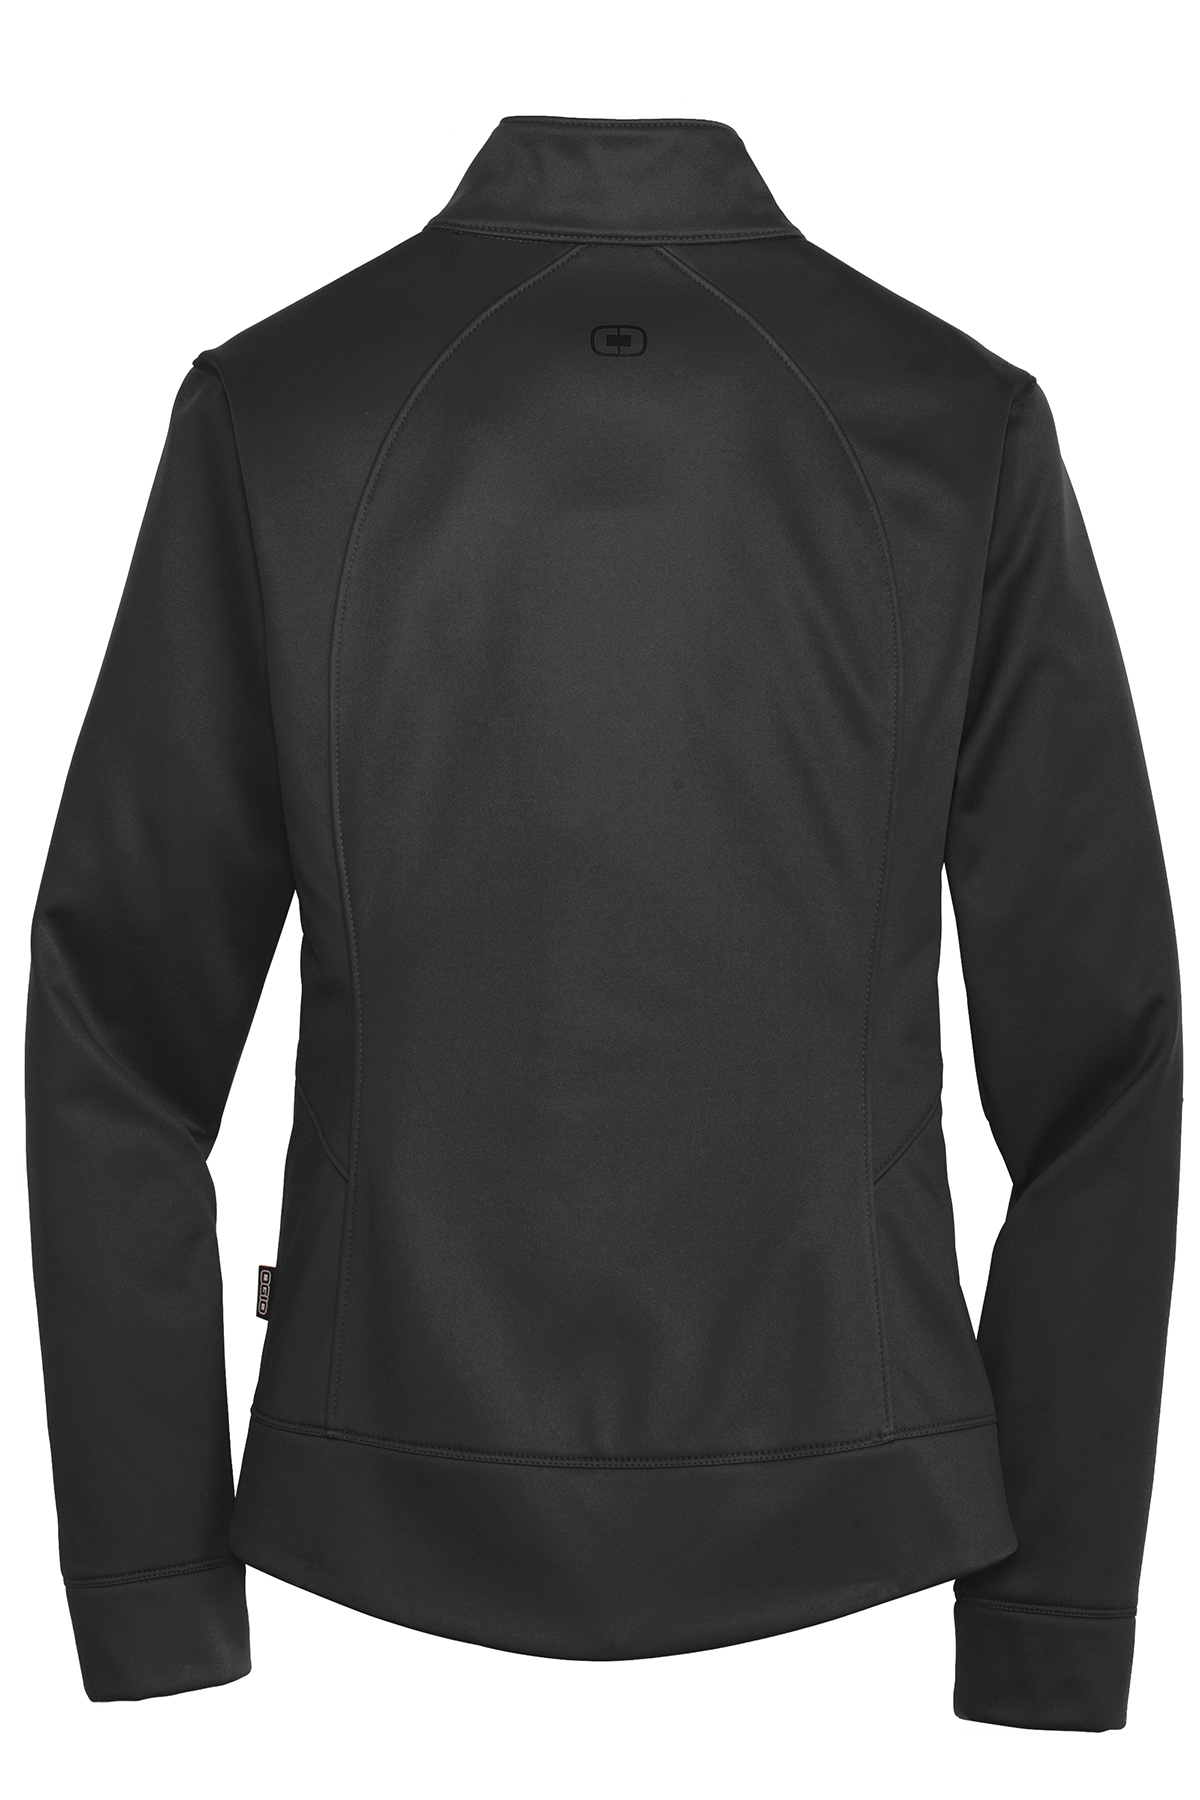 OGIO Ladies Torque II Jacket | Product | SanMar